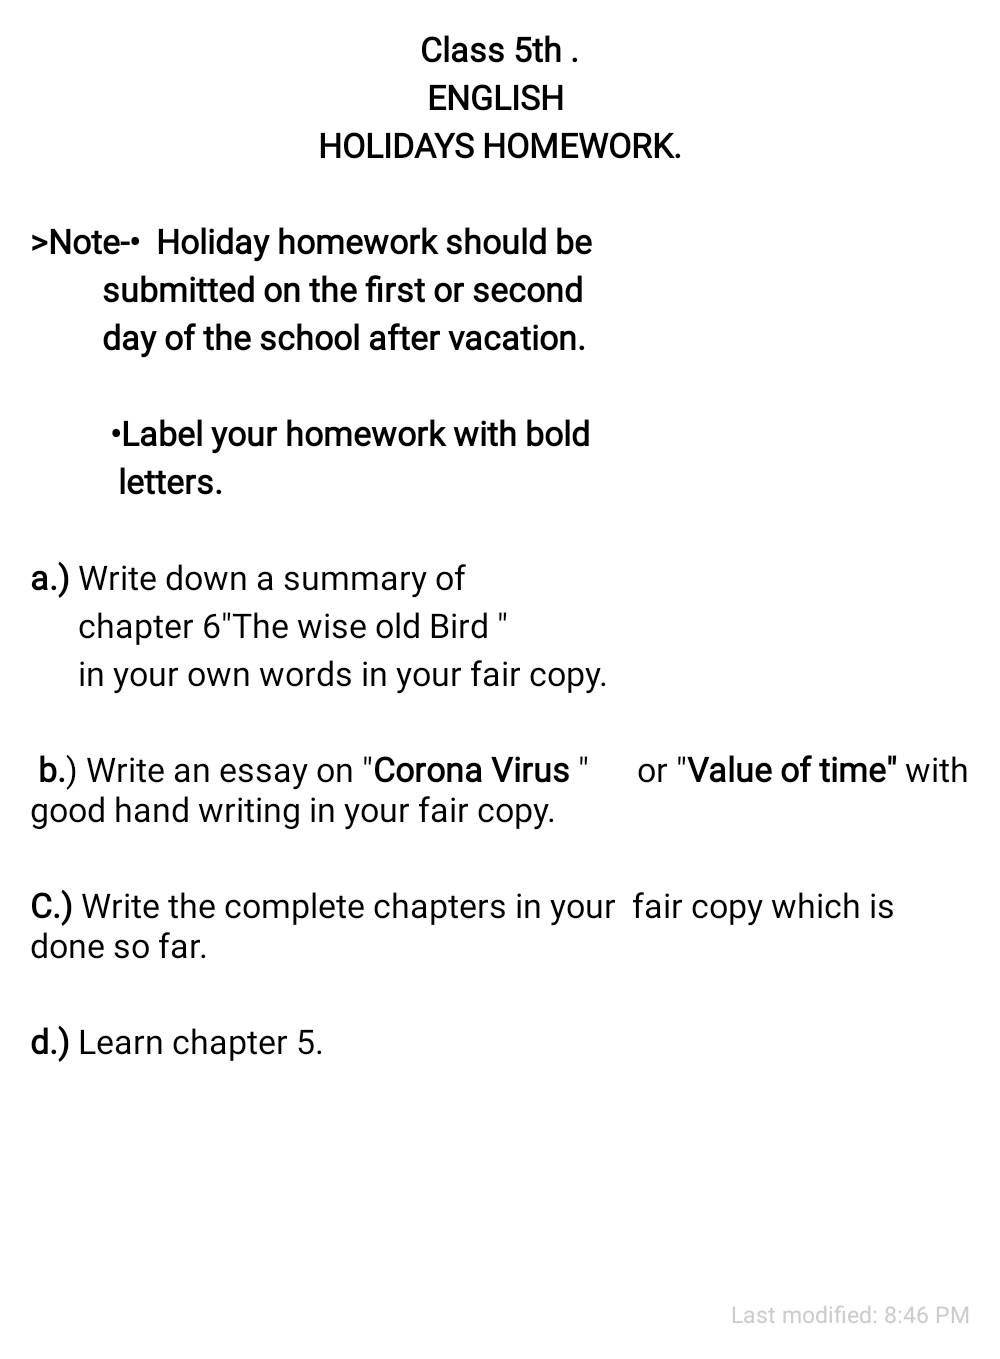 class 9 holiday homework english